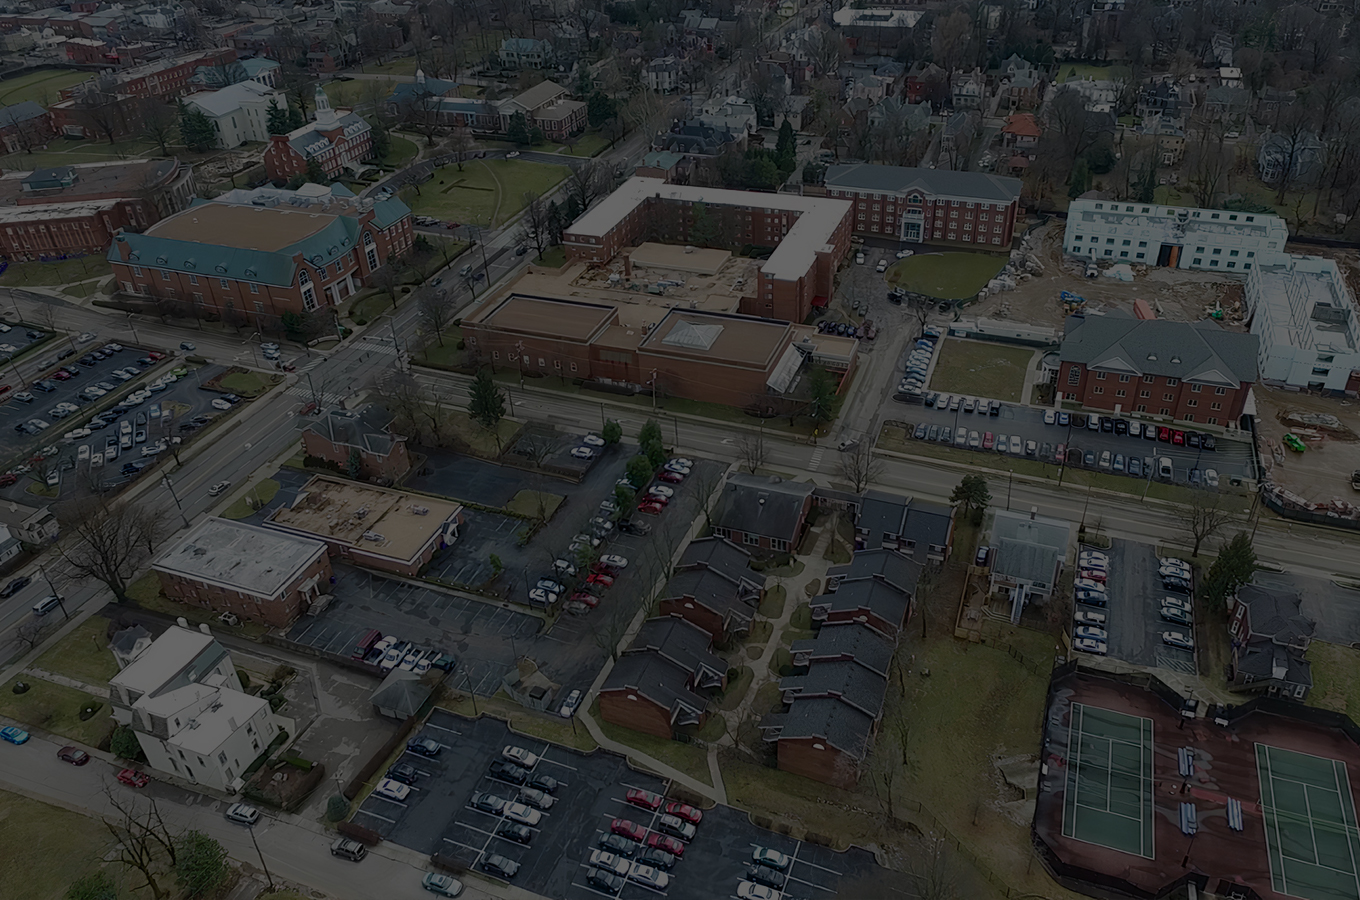 aerial view of university - dark overlay on image